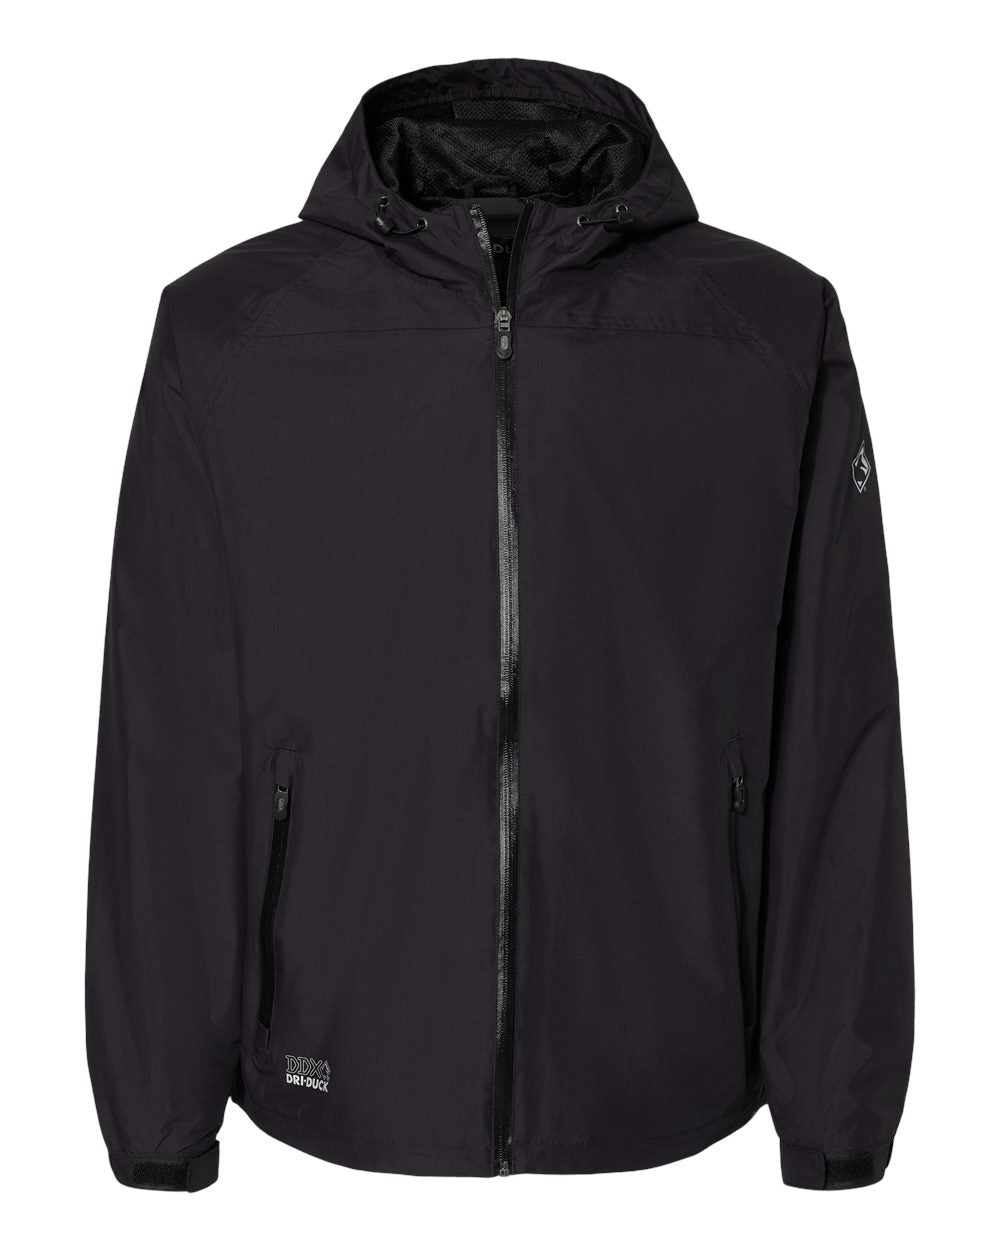 DRI DUCK Torrent Waterproof Hooded Jacket 5335 #color_Black